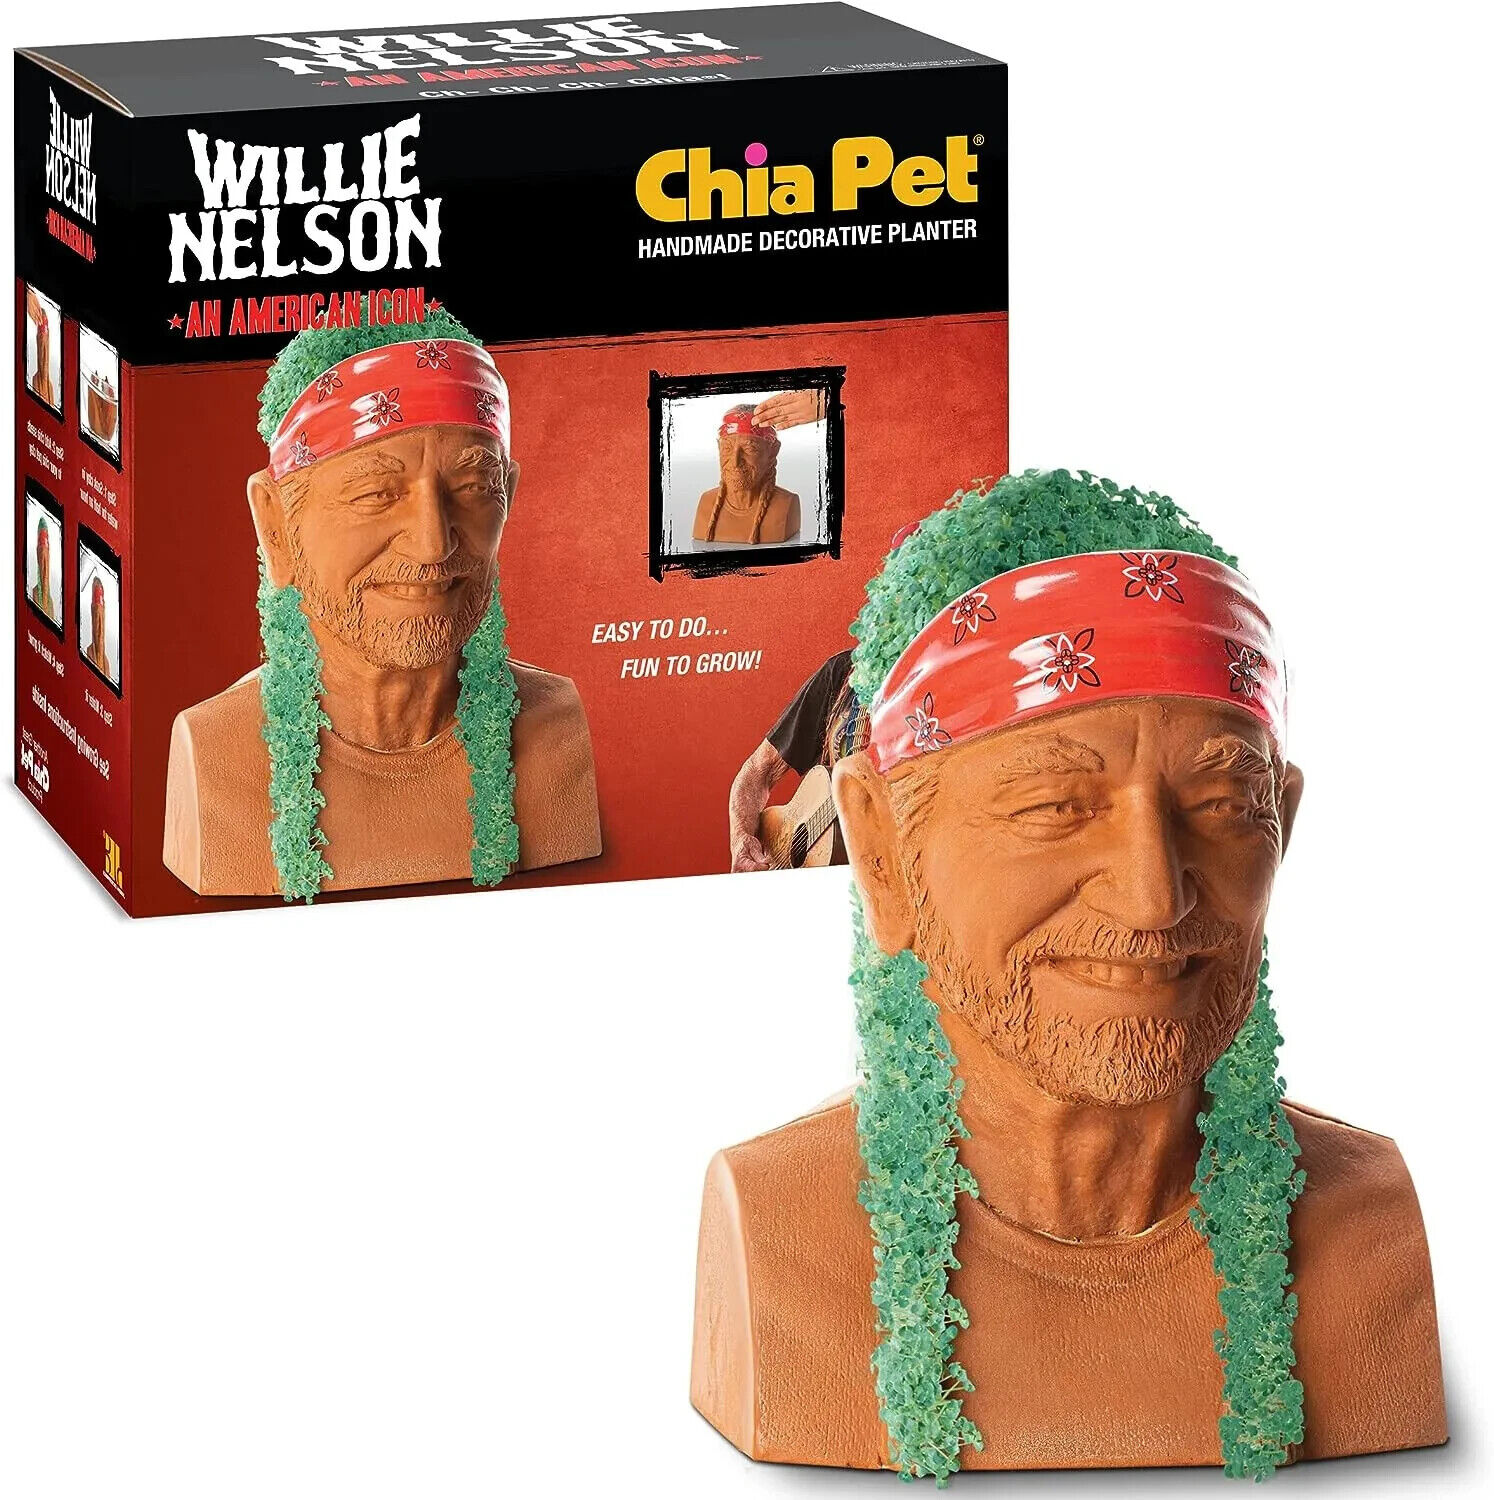 Willie Nelson “An American Icon” Chia Pet Decorative Pottery Planter - NIB